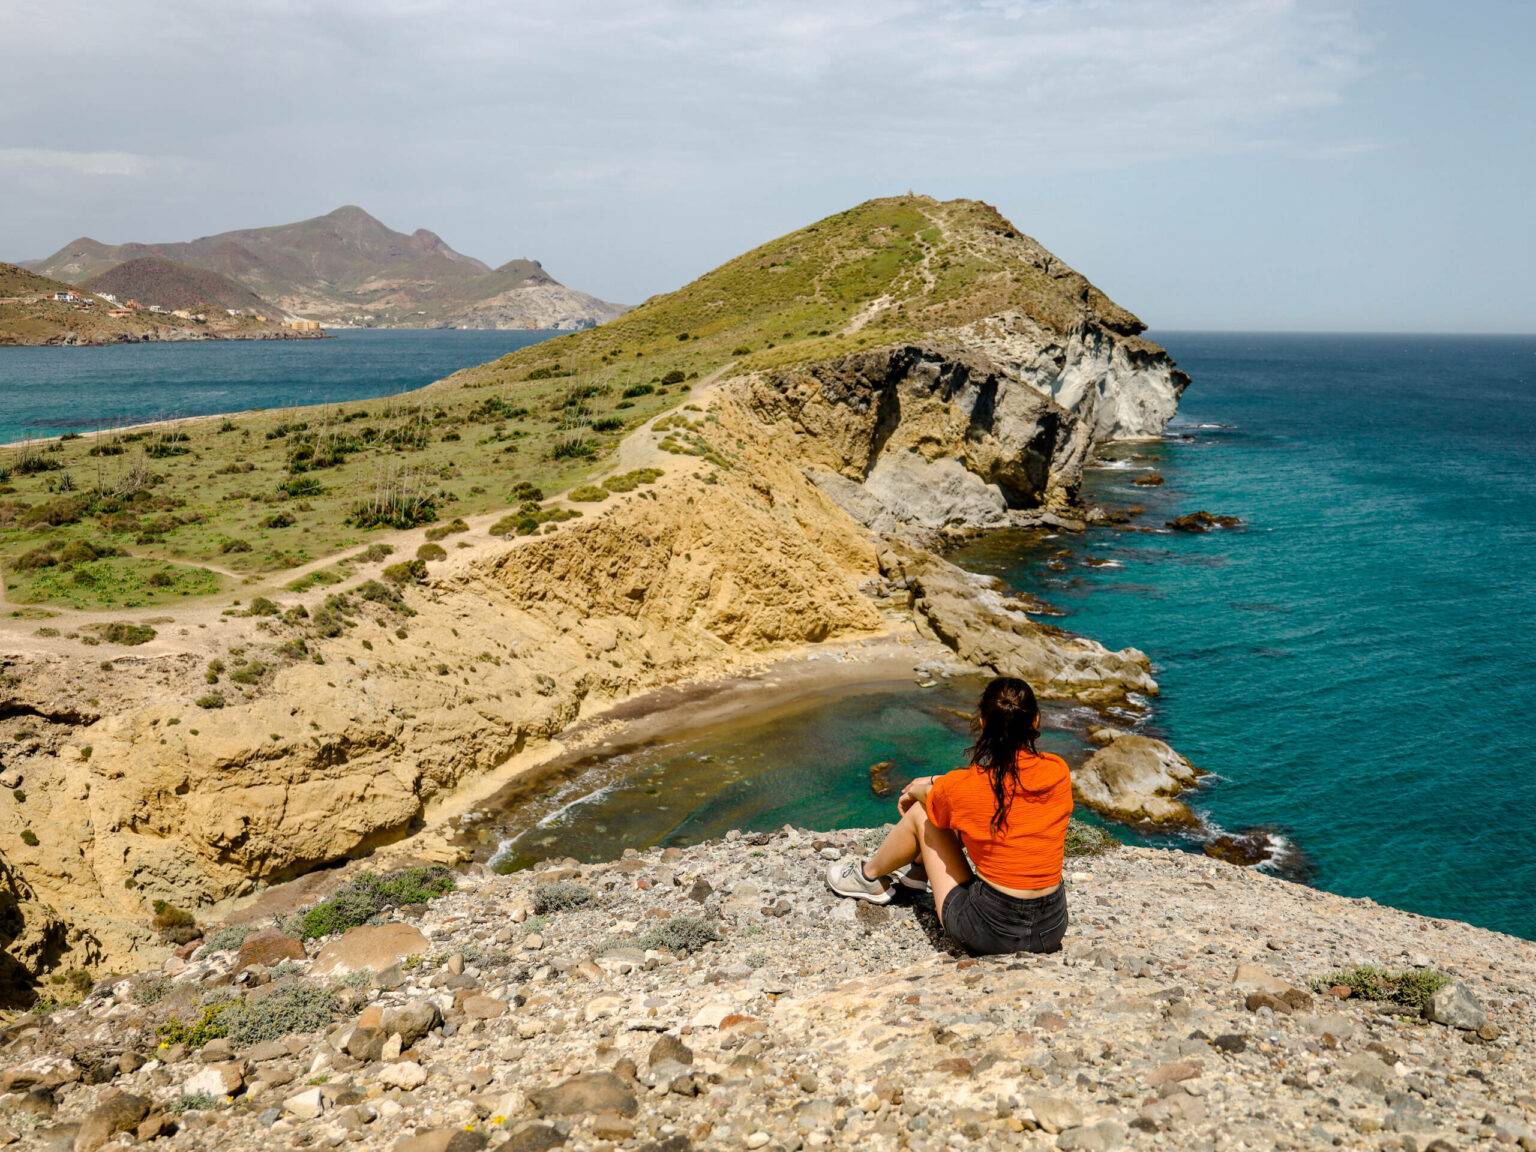 Direkt am Strand in Cabo de Gata gibt es felsige Landschaften direkt am türkisfarbenen Meer.